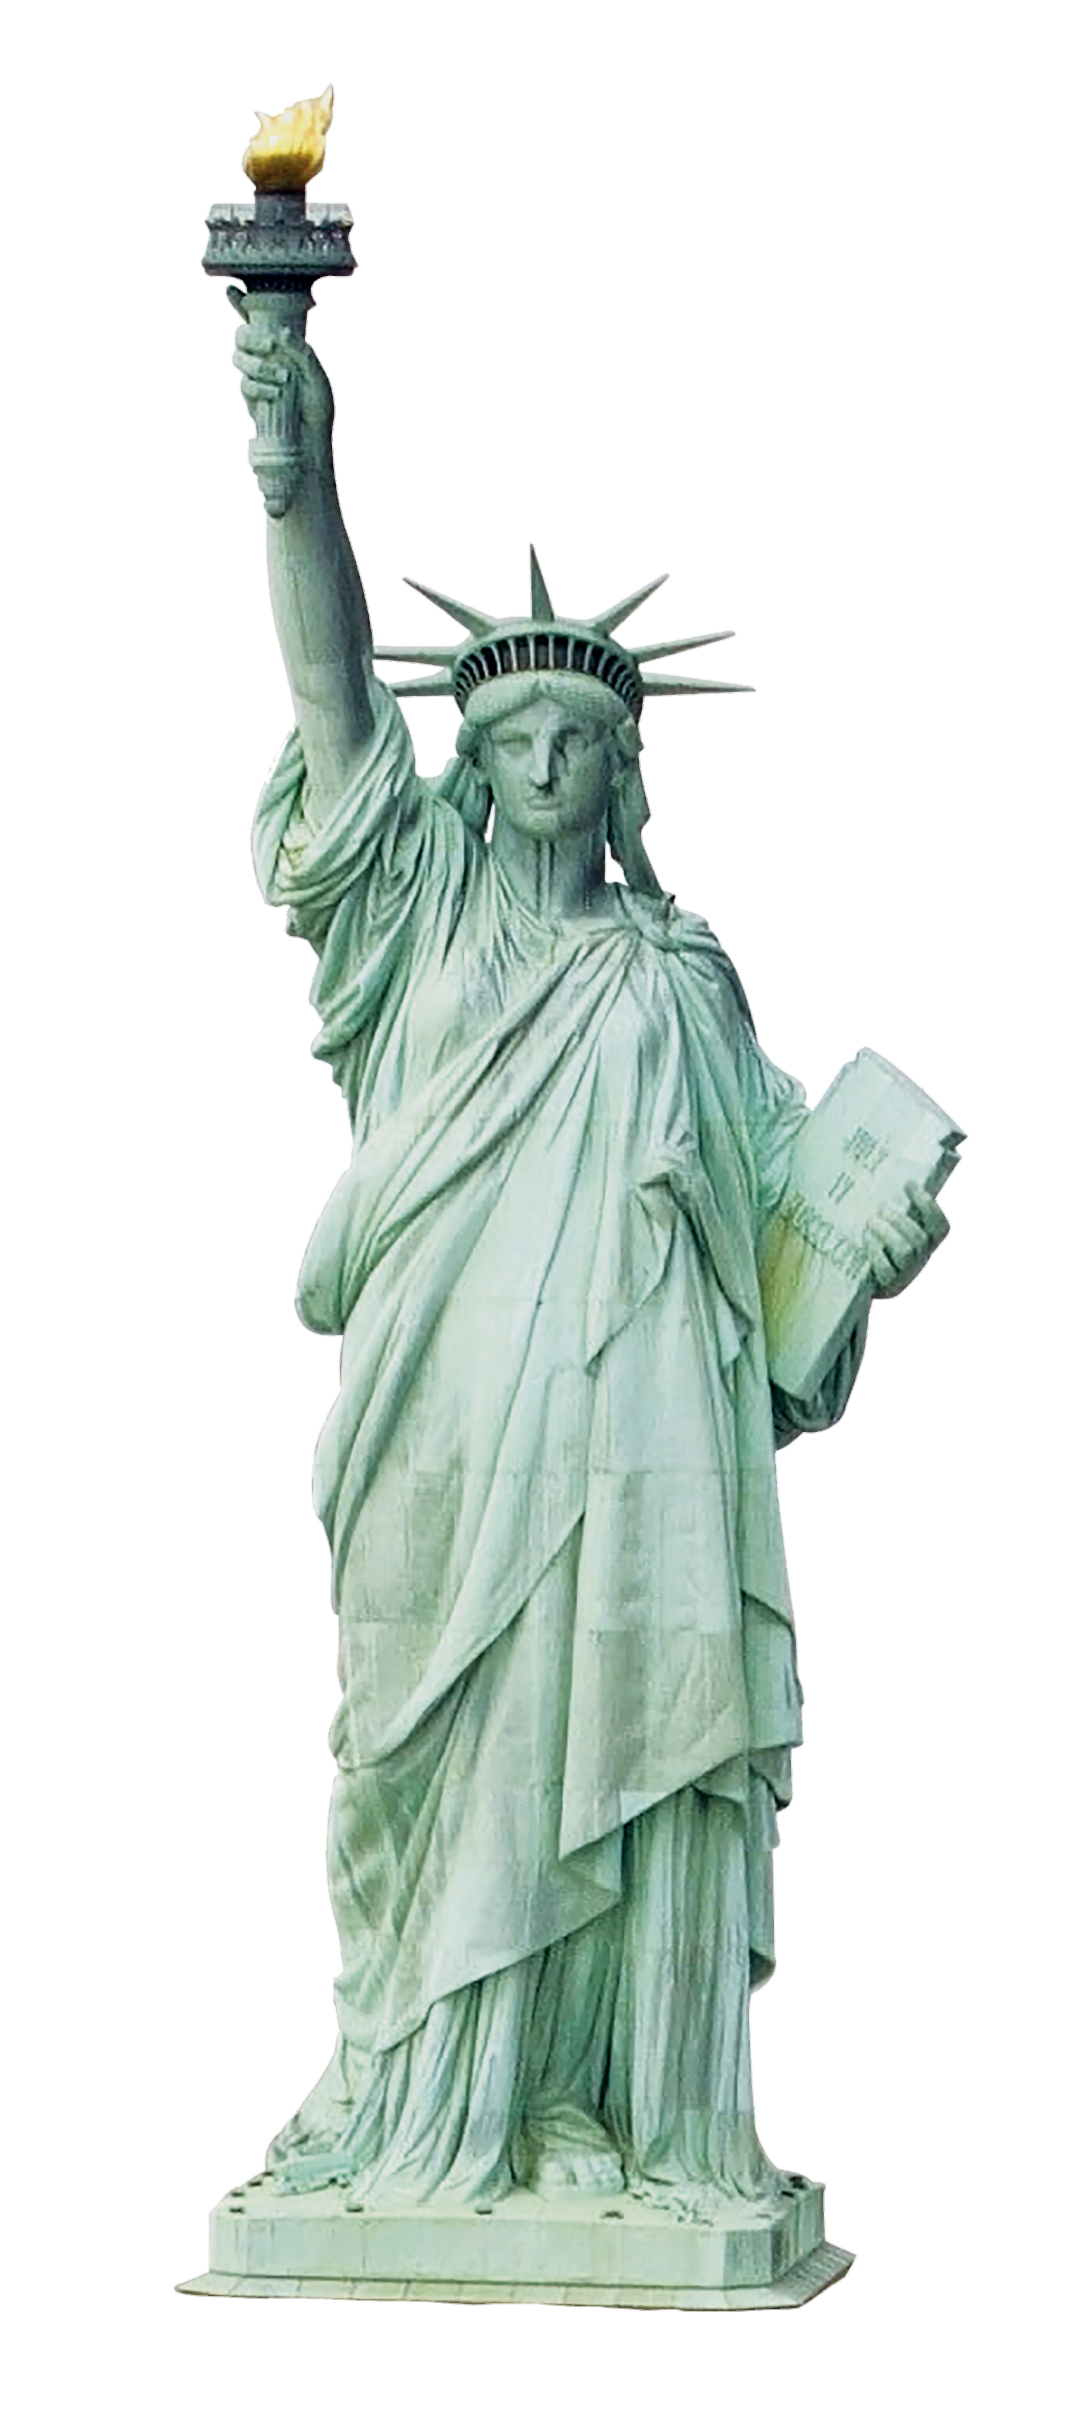 Statue-of-Liberty-1